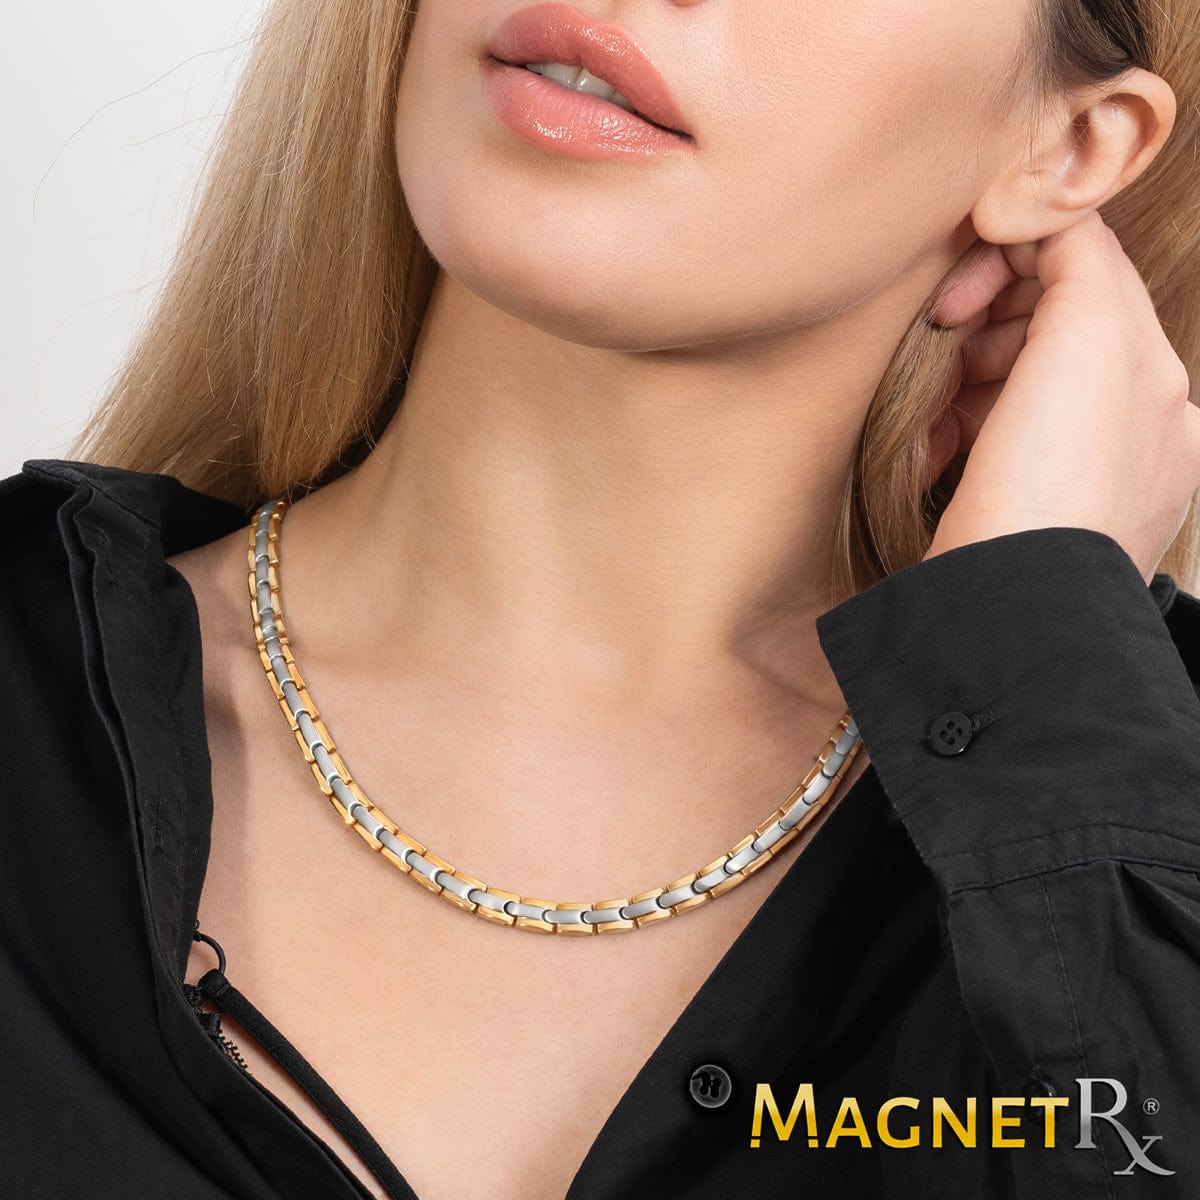 MagnetRX Magnetic Copper Necklace Curb Chain